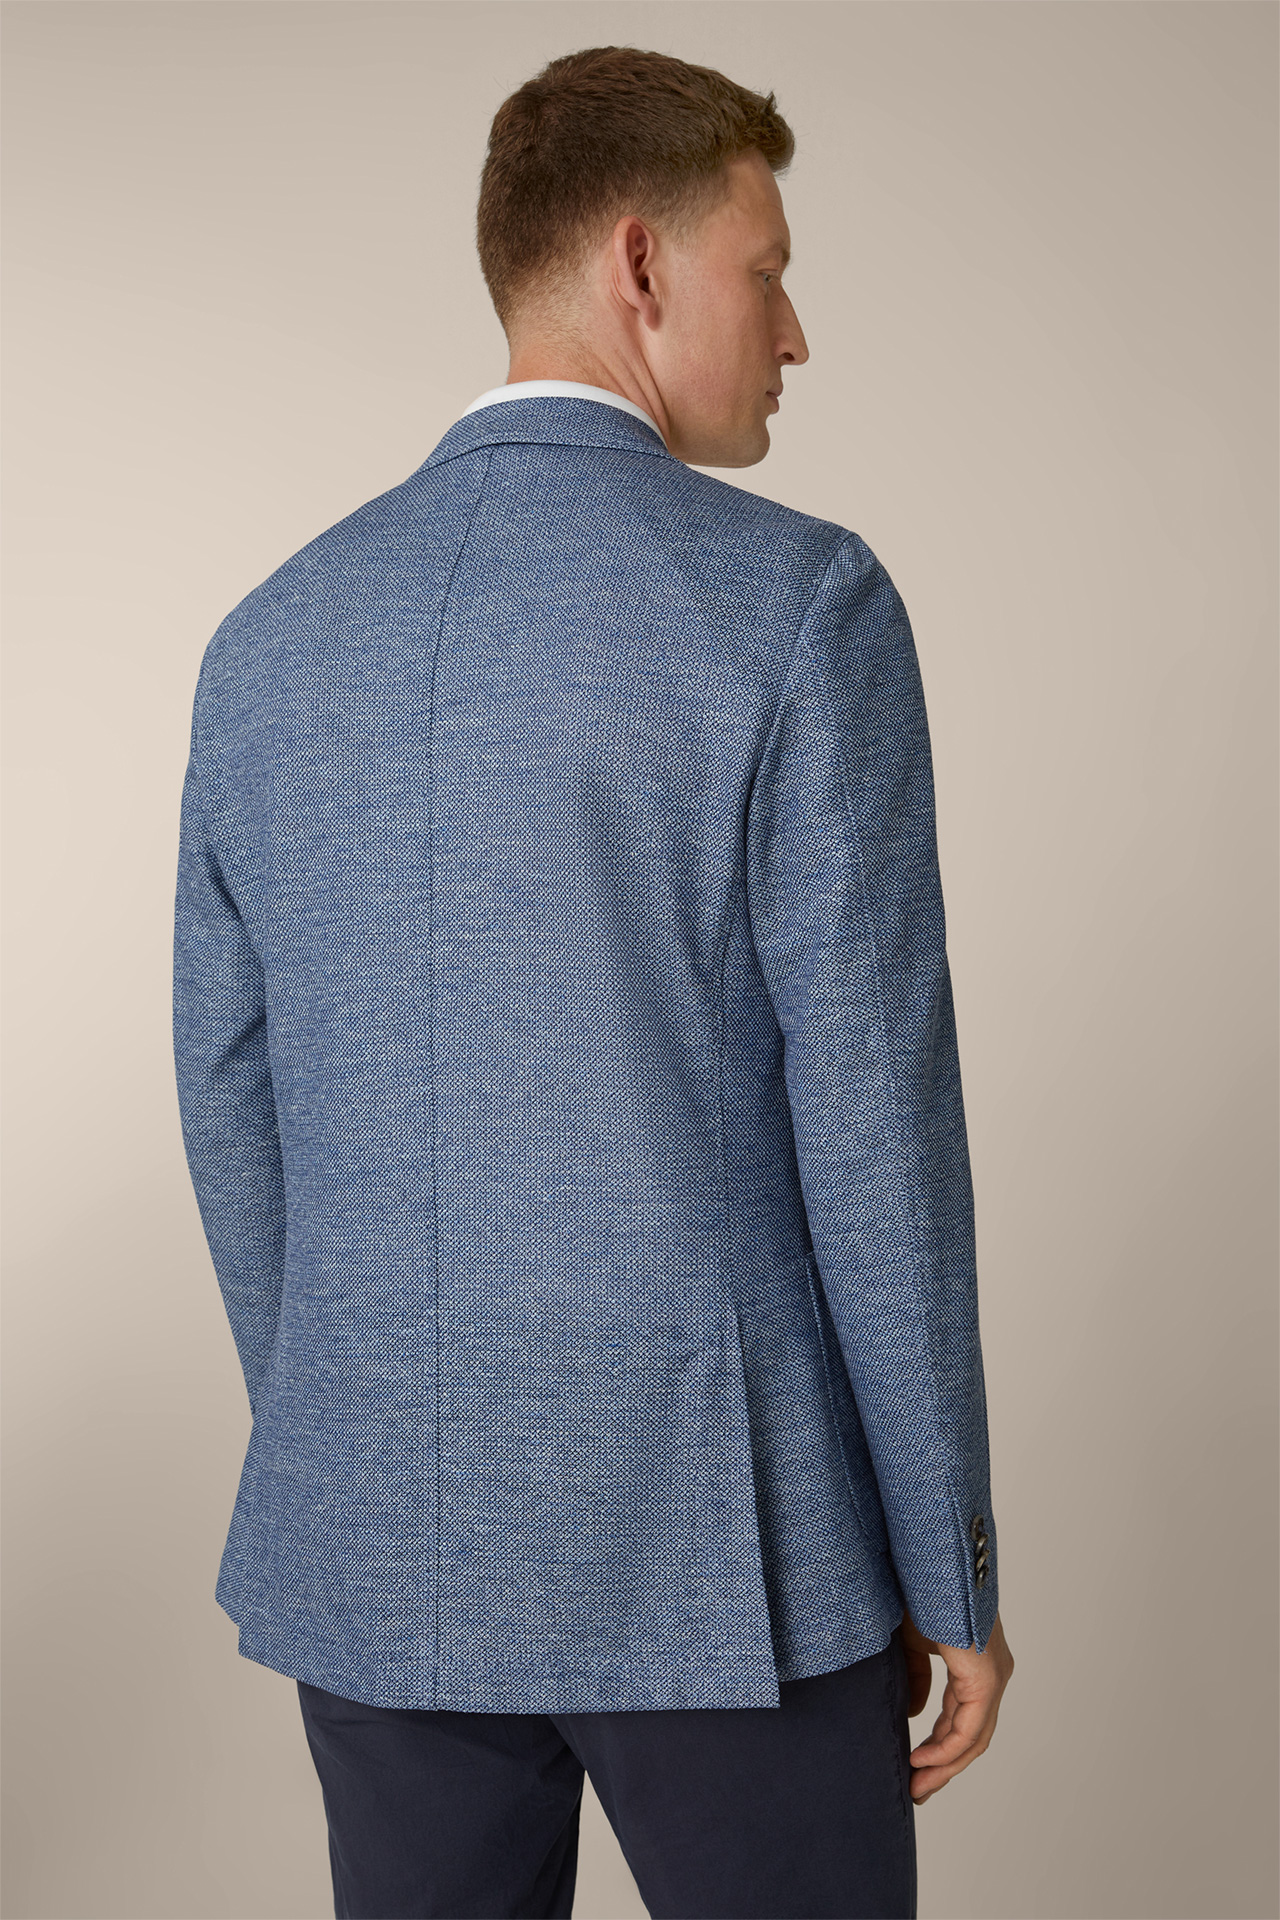 Giro Linen Mix Jacket in Blue Marl, textured